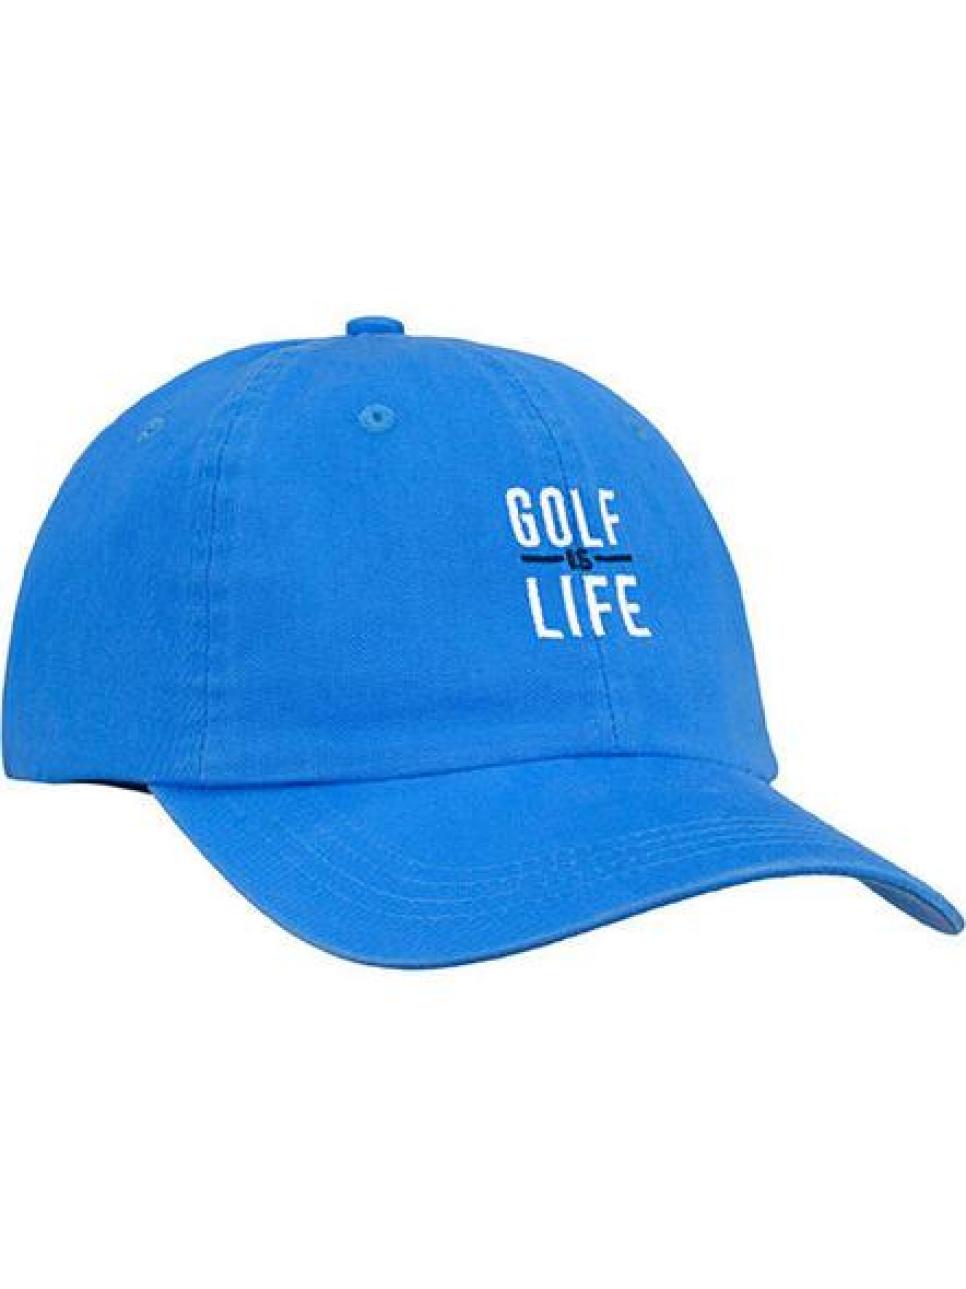 Newport Golf is Life Stacked Adjustable Cap